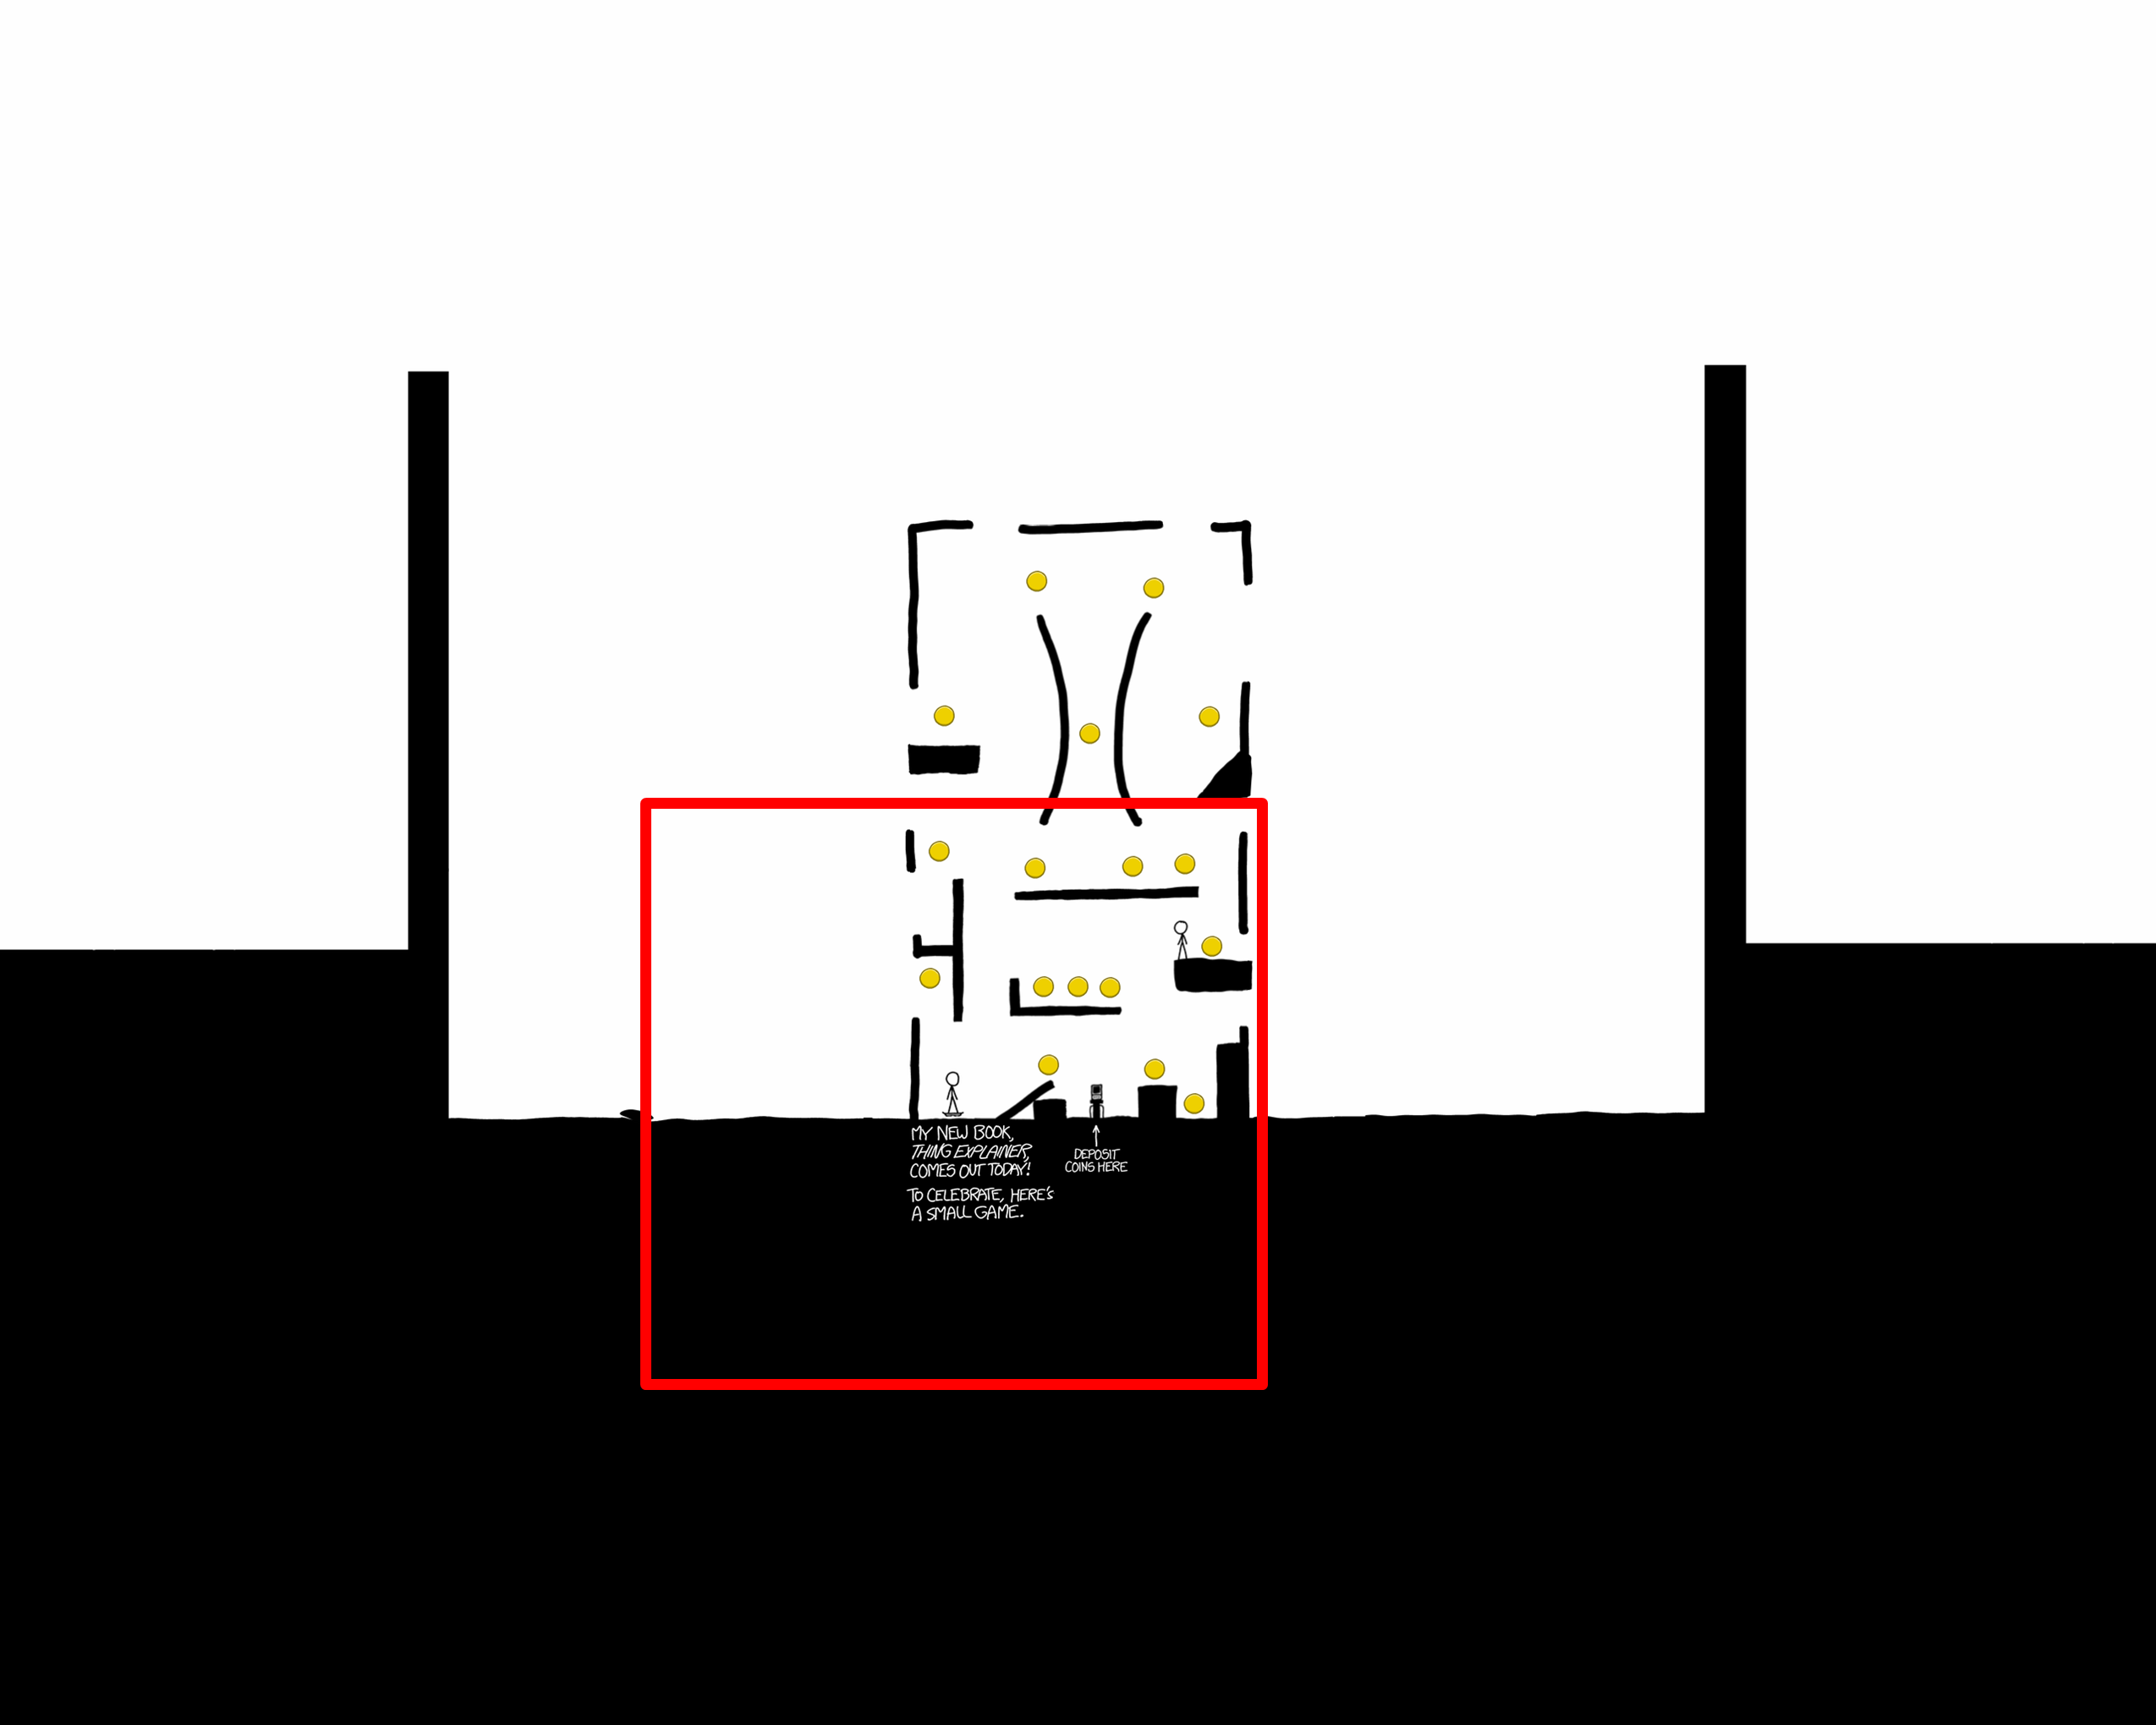 1608: Hoverboard/Screen-shots - explain xkcd